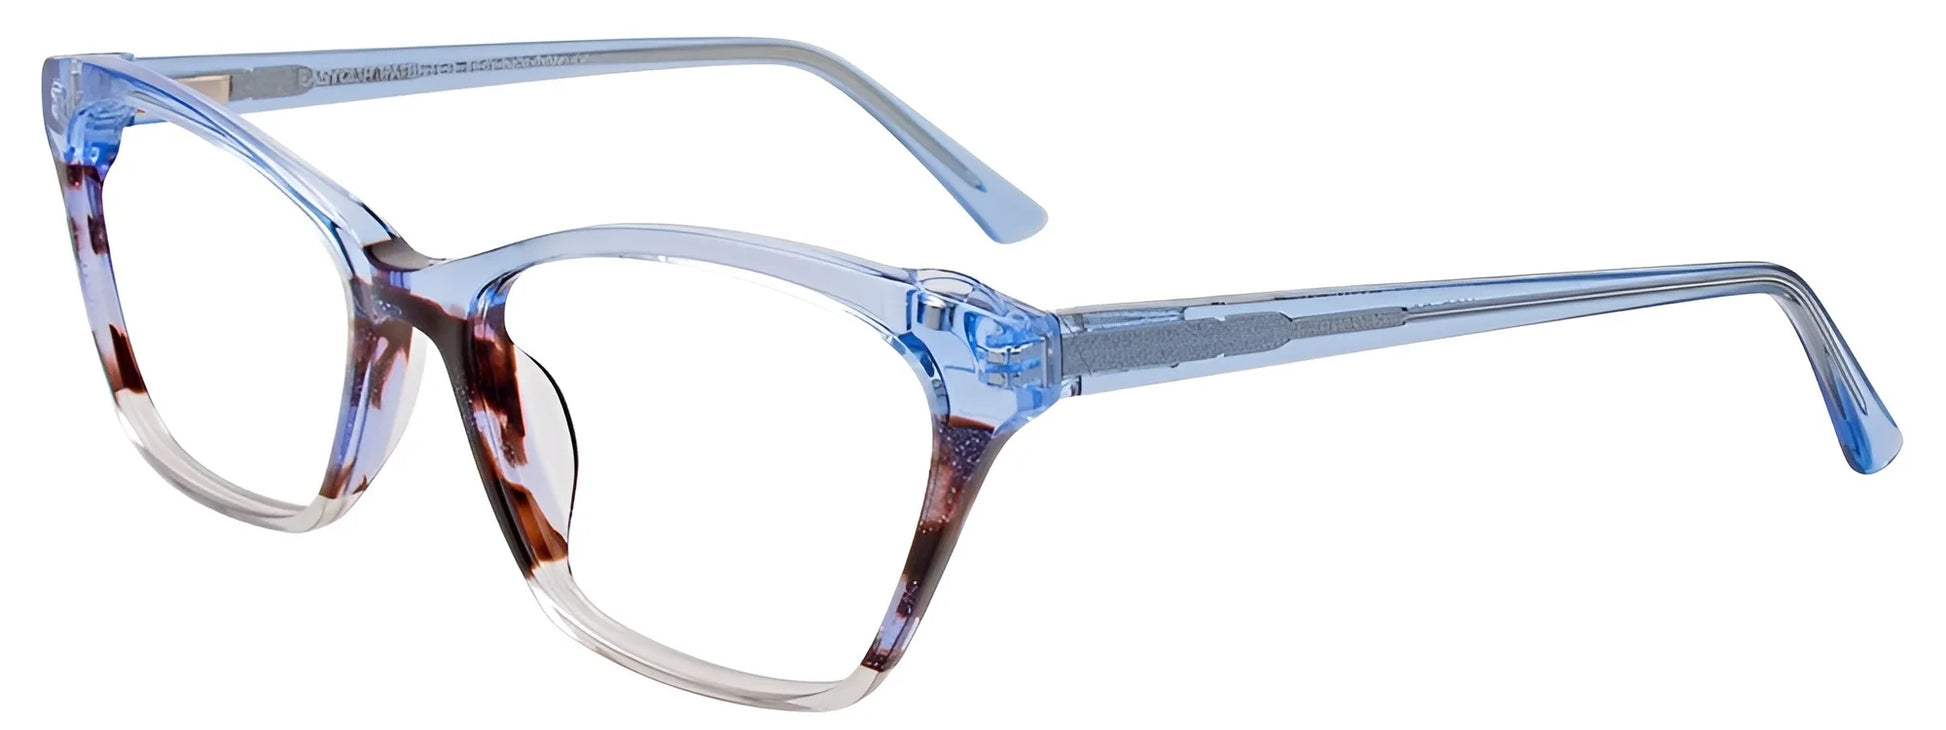 EasyClip EC542 Eyeglasses with Clip-on Sunglasses Crystal Light Blue / Marbled Dark Brown / Light Blue